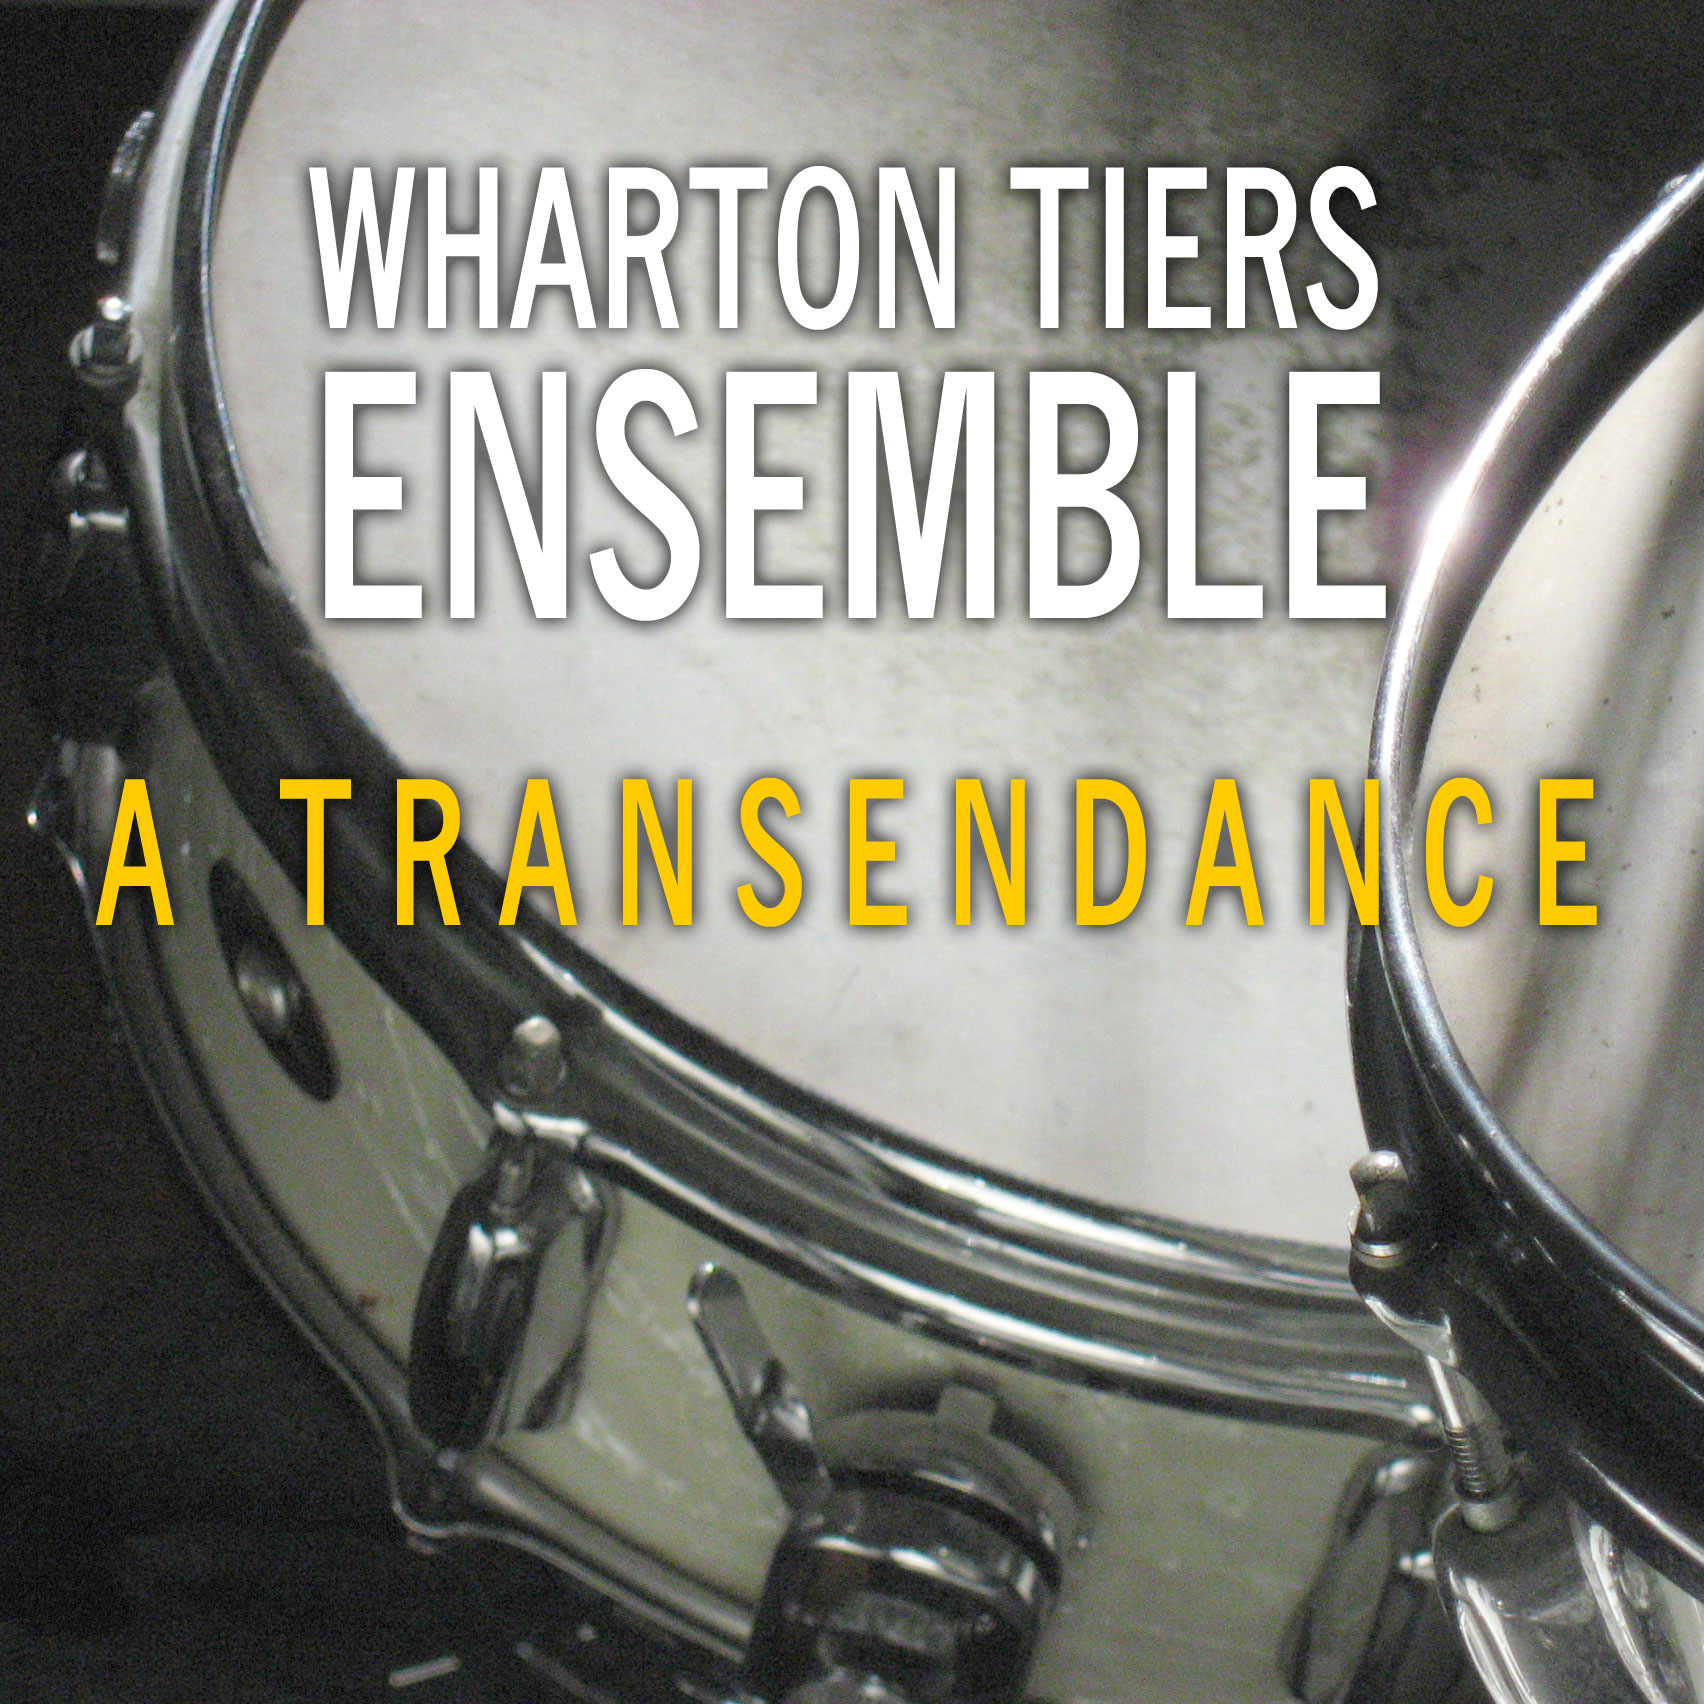 Wharton Tiers Ensemble, A Transendance cover art